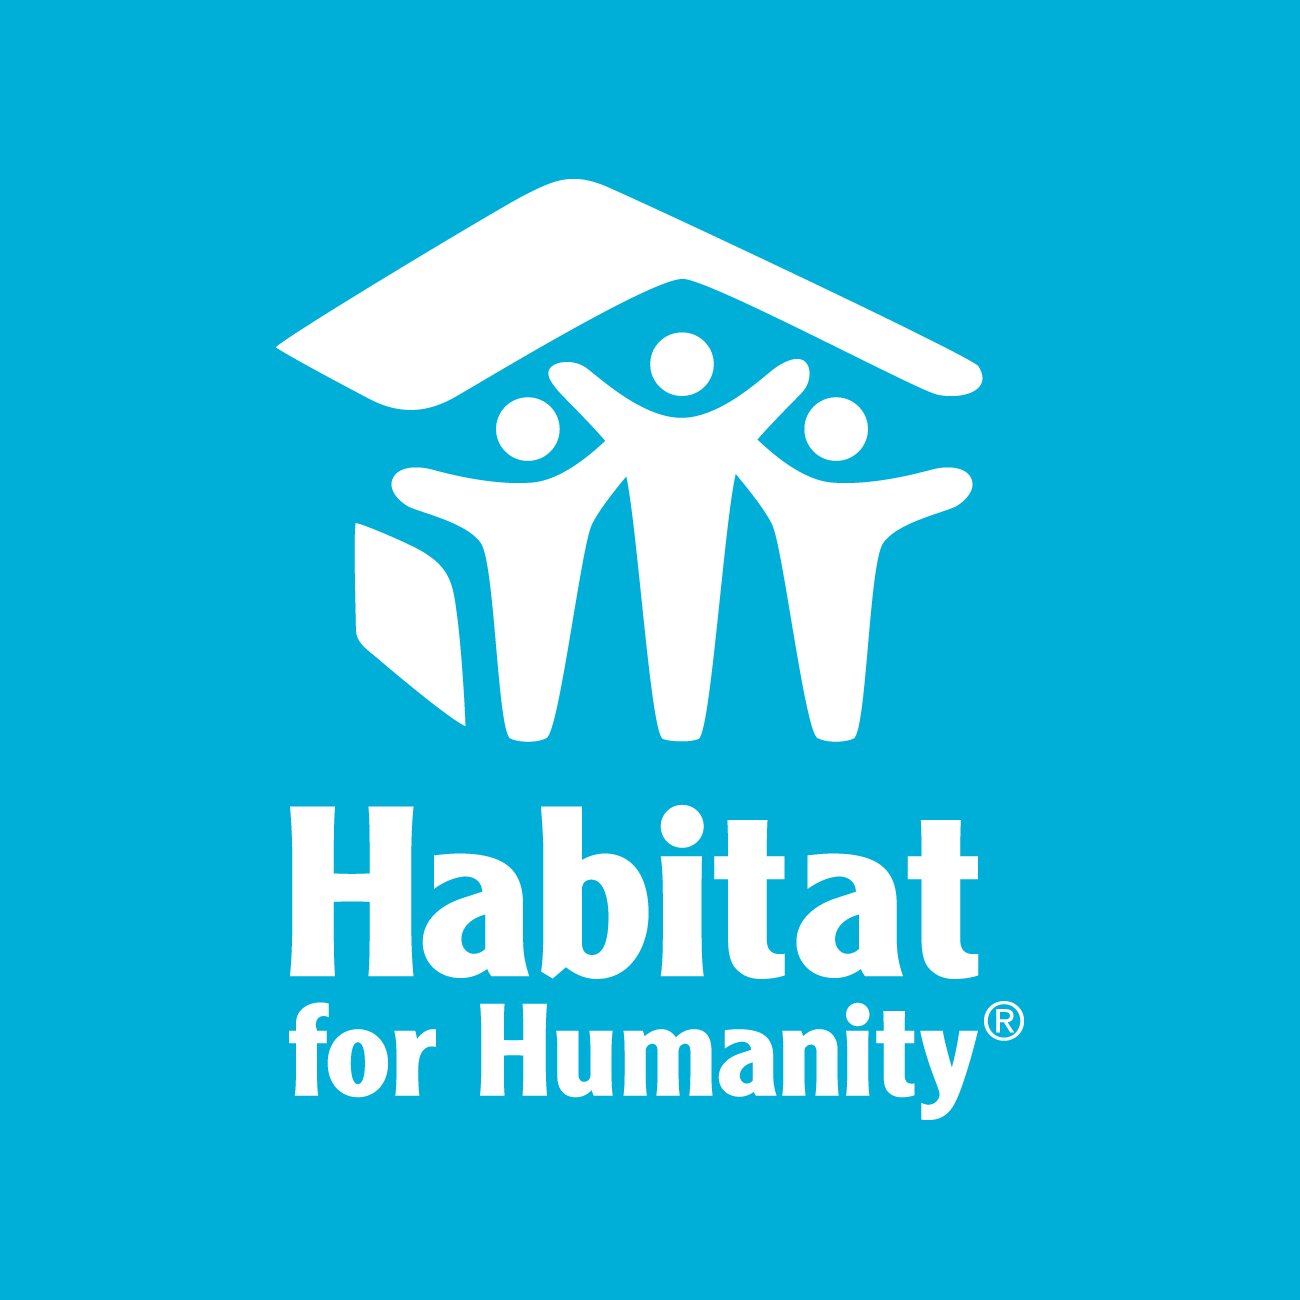 Habitat for Humanity of Dane County